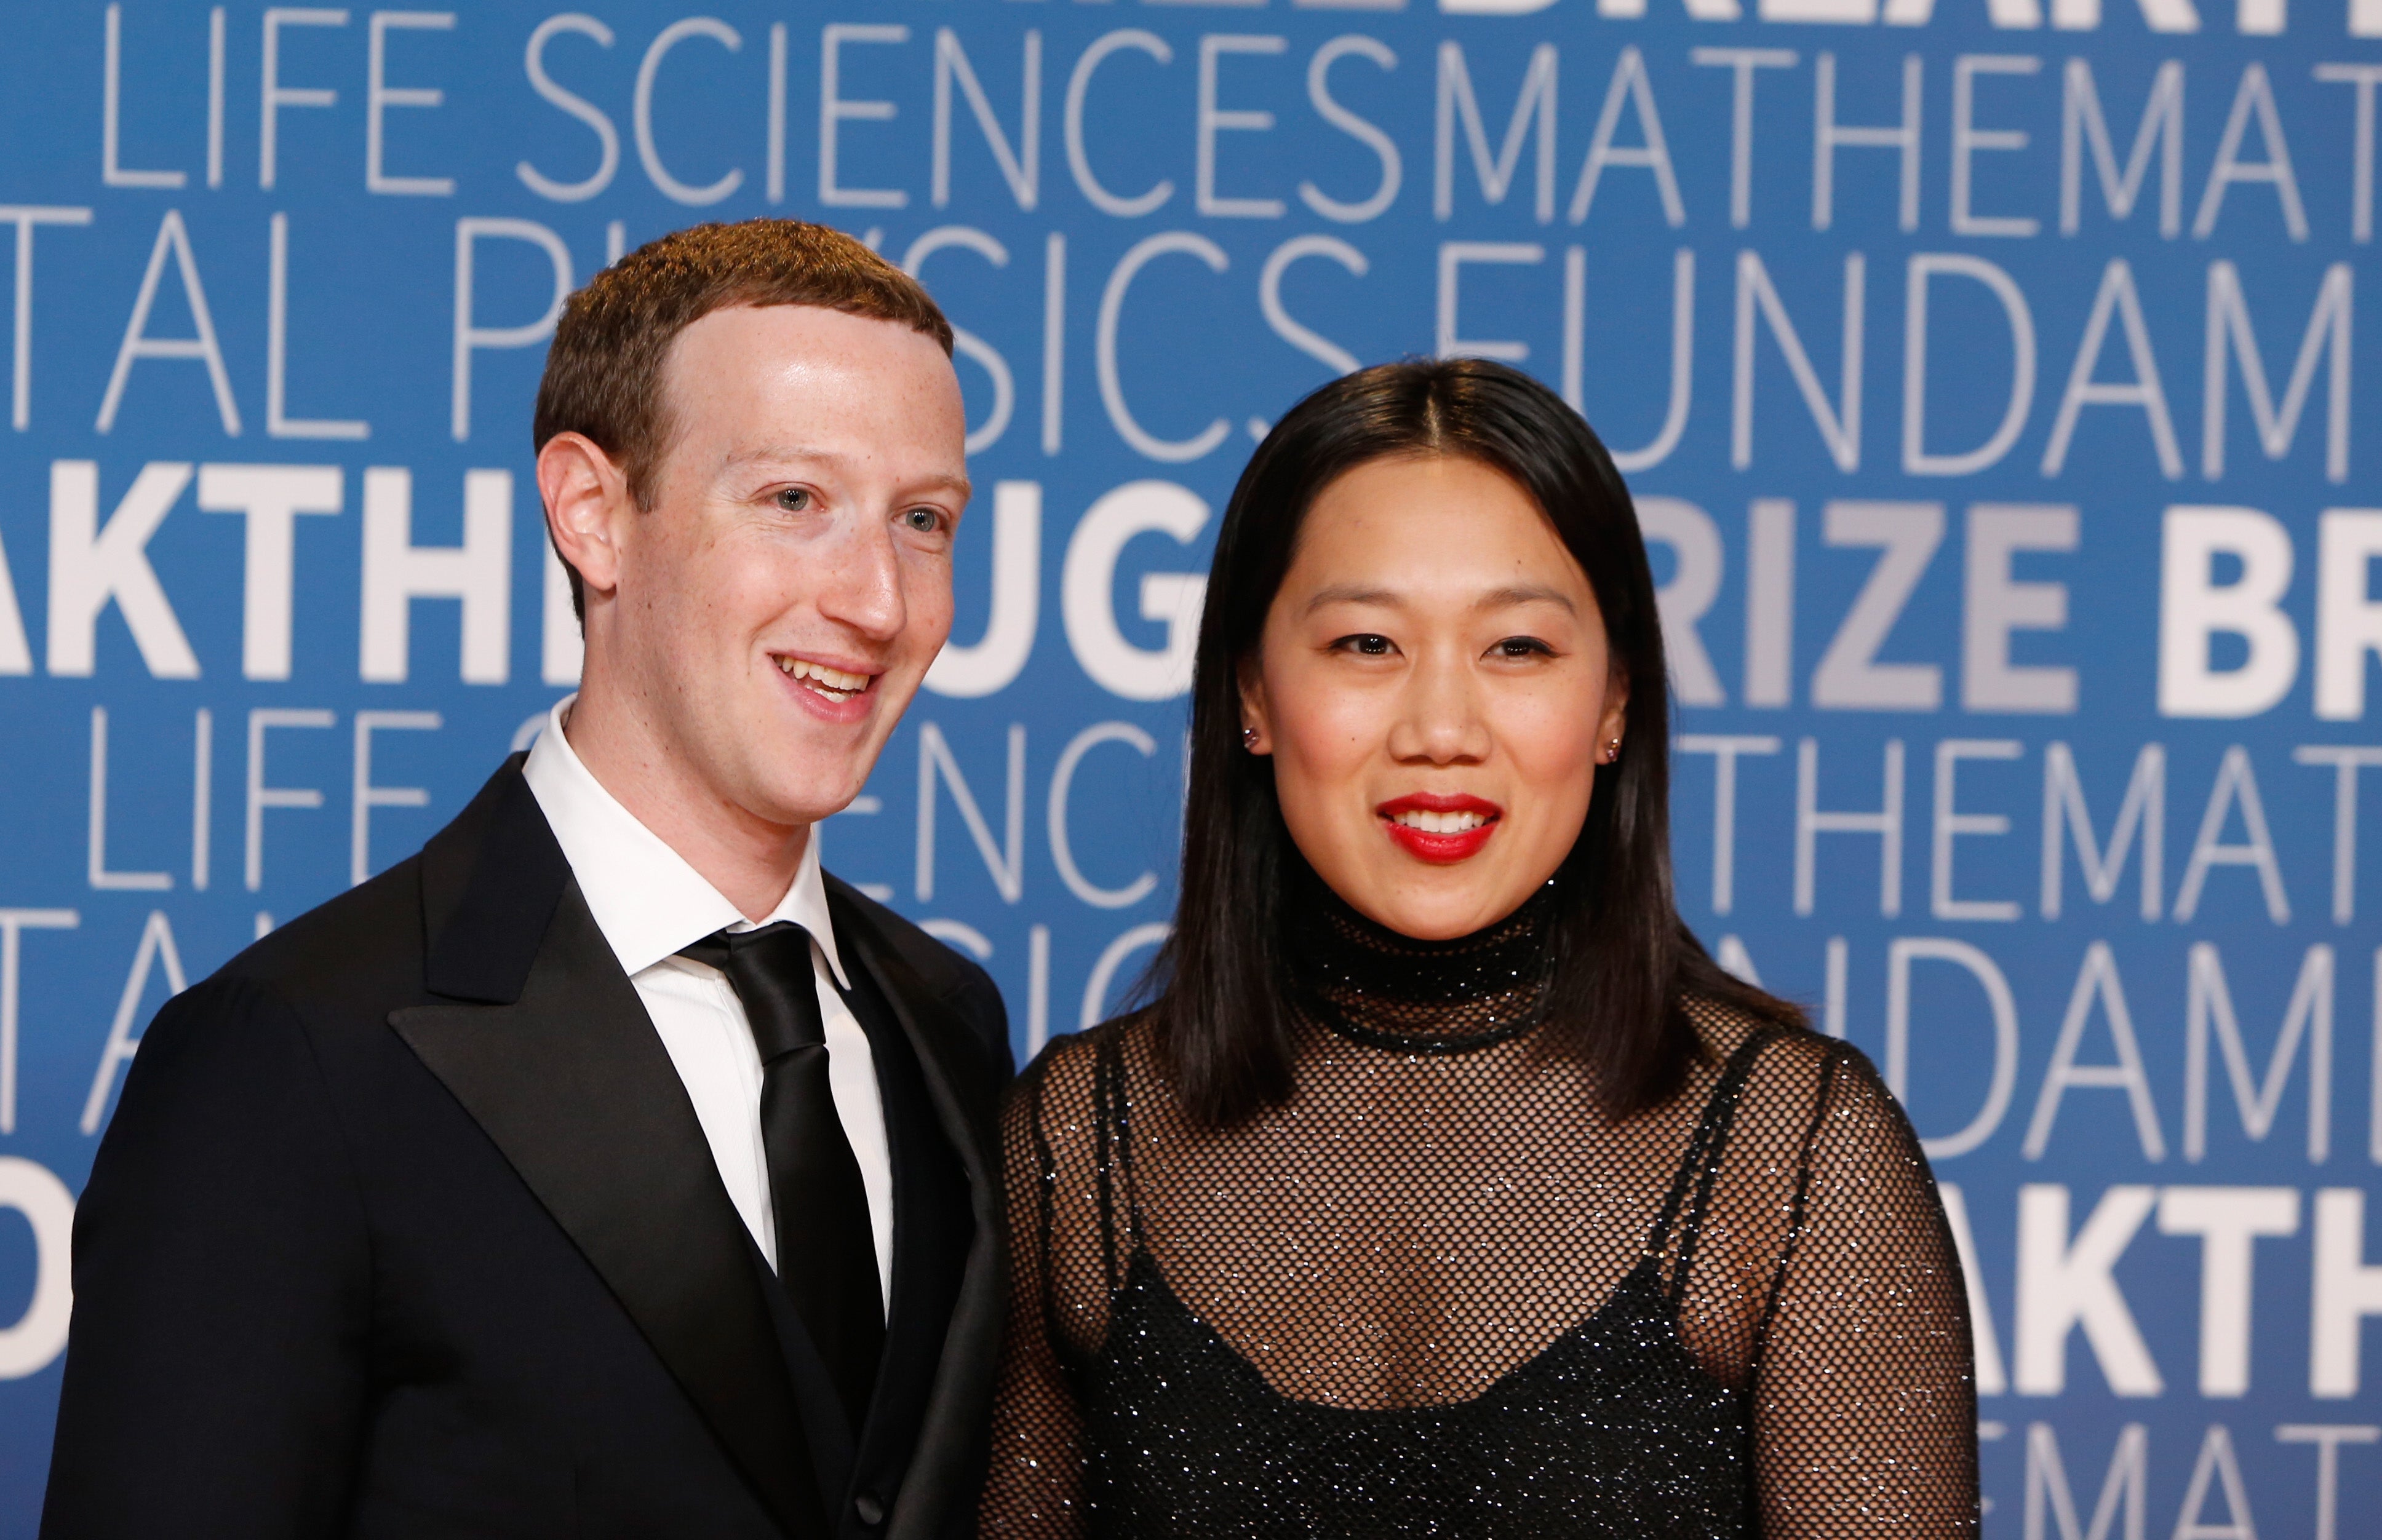 Mark Zuckerberg is teaching daughters how to code